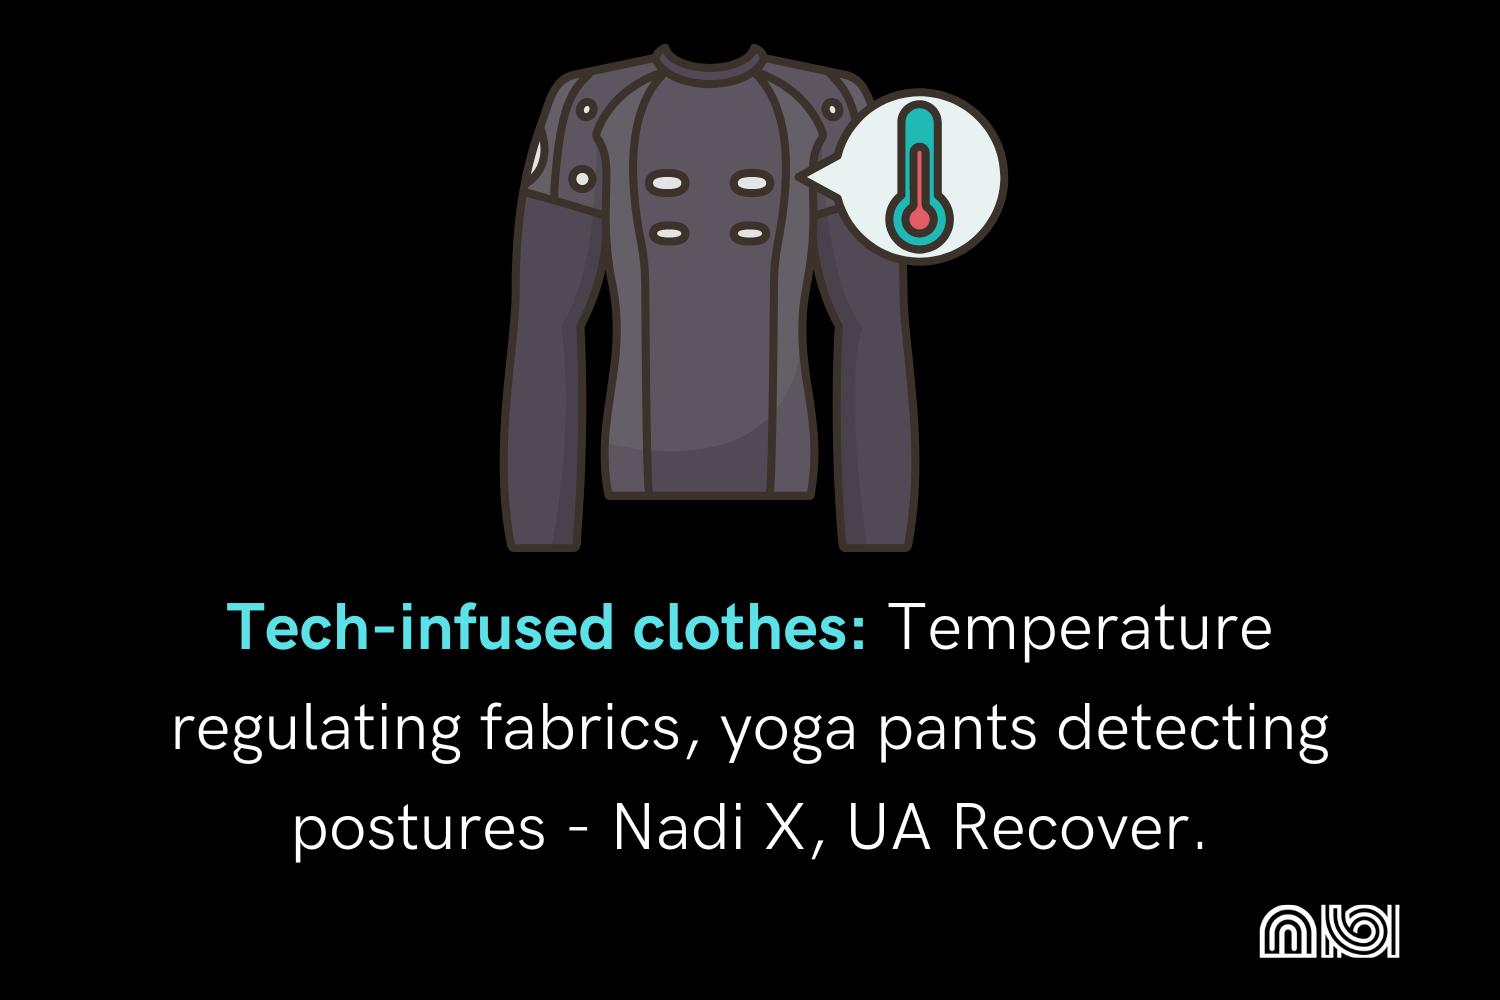 Revolutionary tech-infused clothing: Nadi X Yoga Pants, UA Recover, and more pushing fashion boundaries.